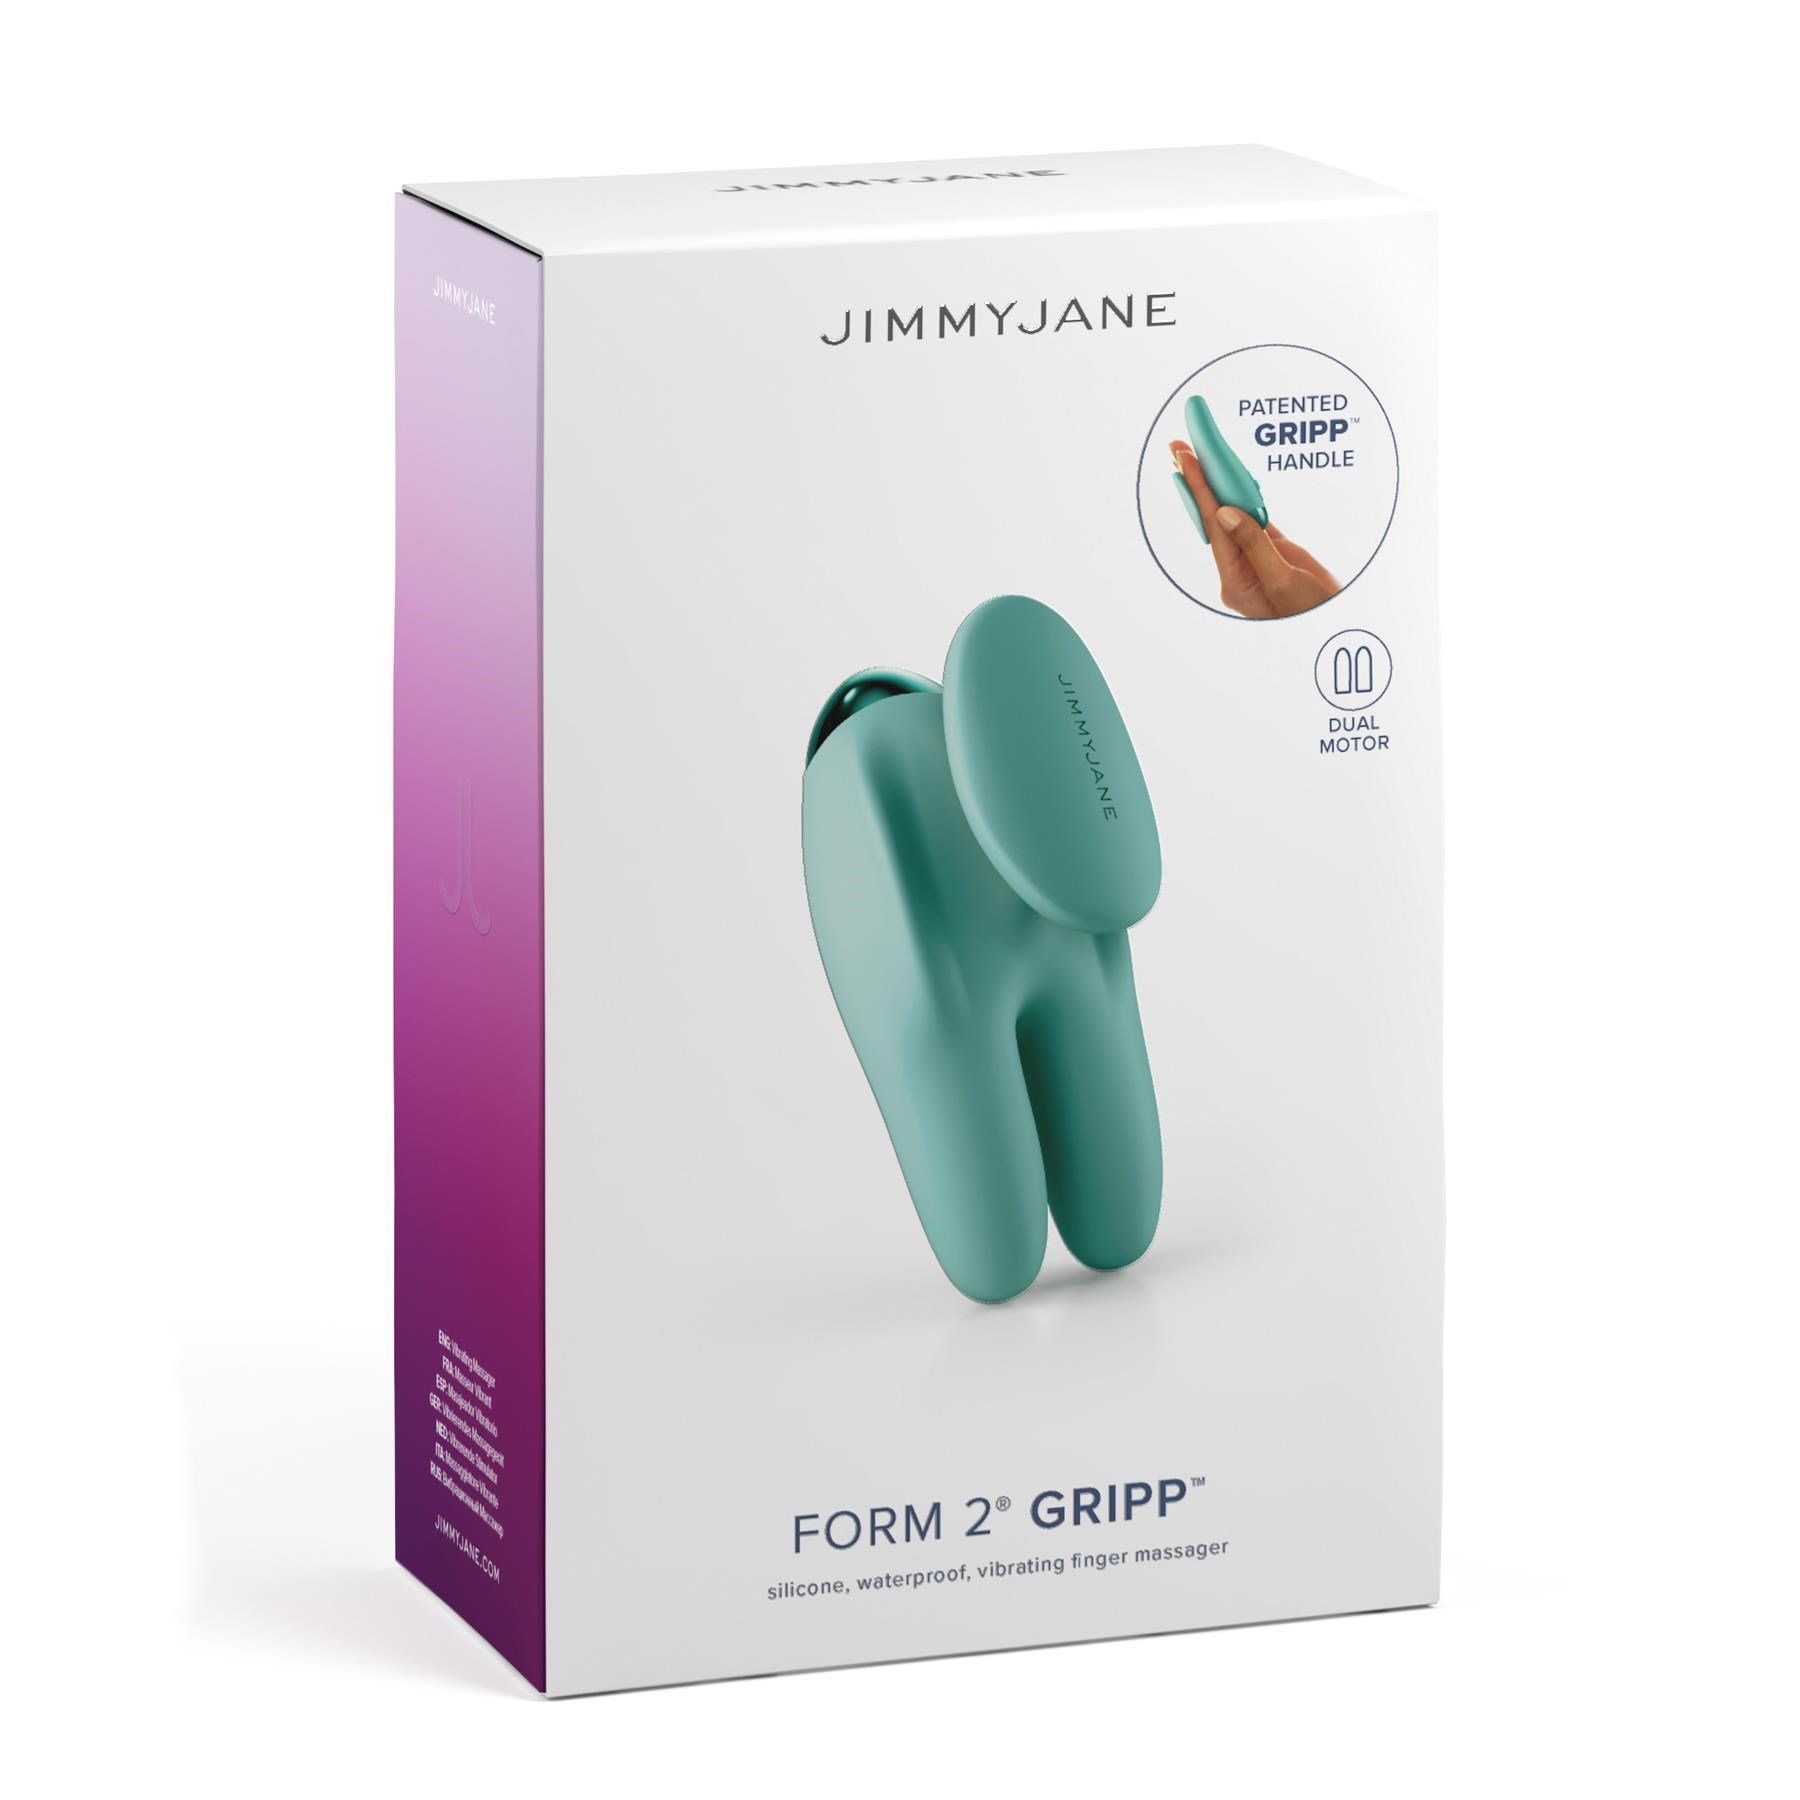 Jimmy Jane Form 2 Gripp Finger Vibrator - Packaging